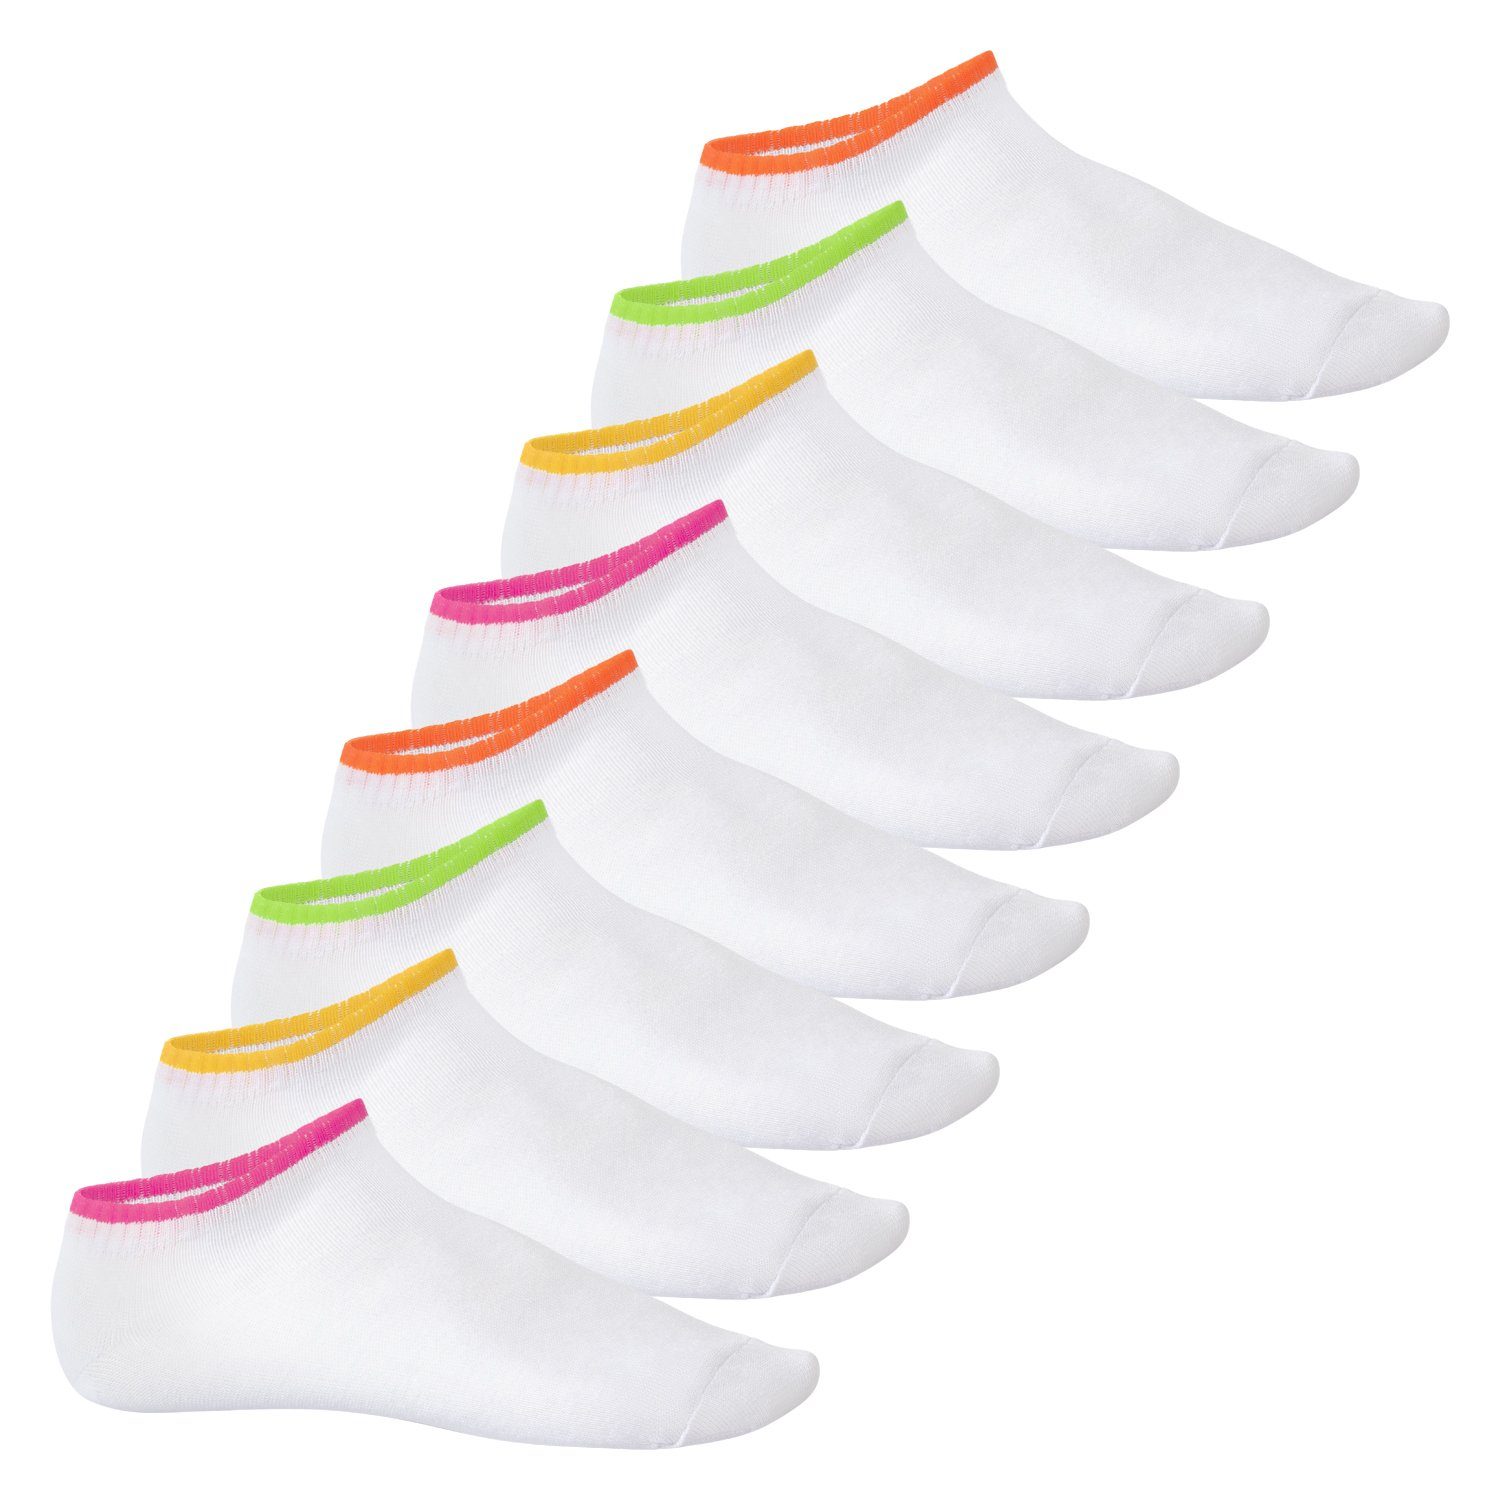 Footstar Füßlinge Damen & Herren Sneaker Socken (8 Paar), Neon Sportsocken Neon Flash - Weiß